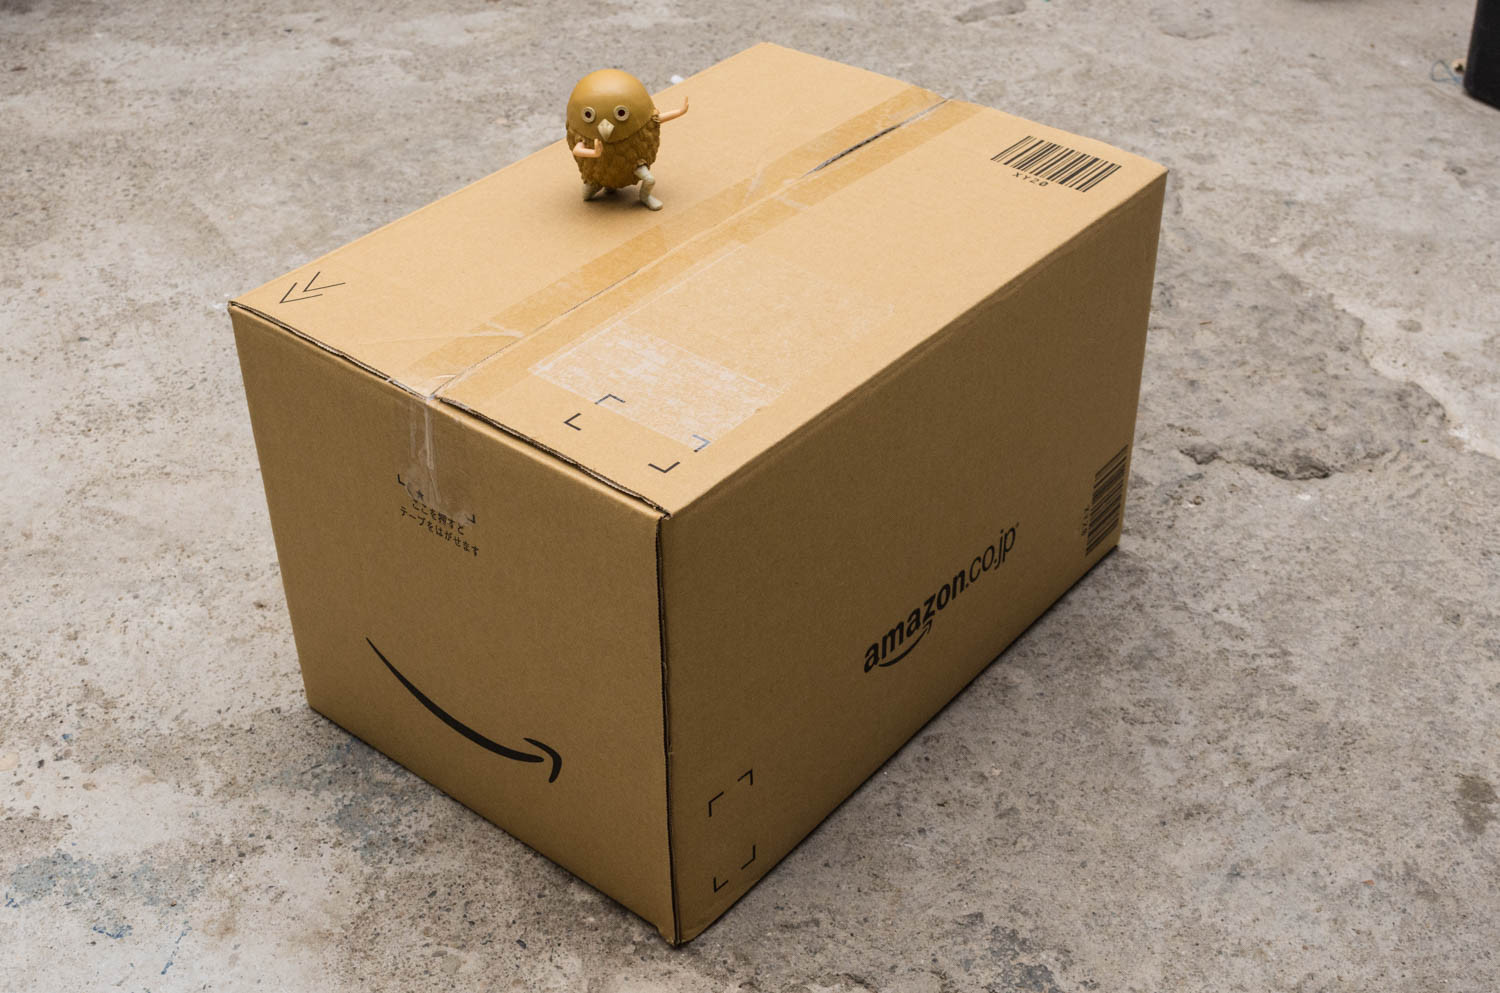 Amazonのダンボール箱の種類 Xy モモンハン日記